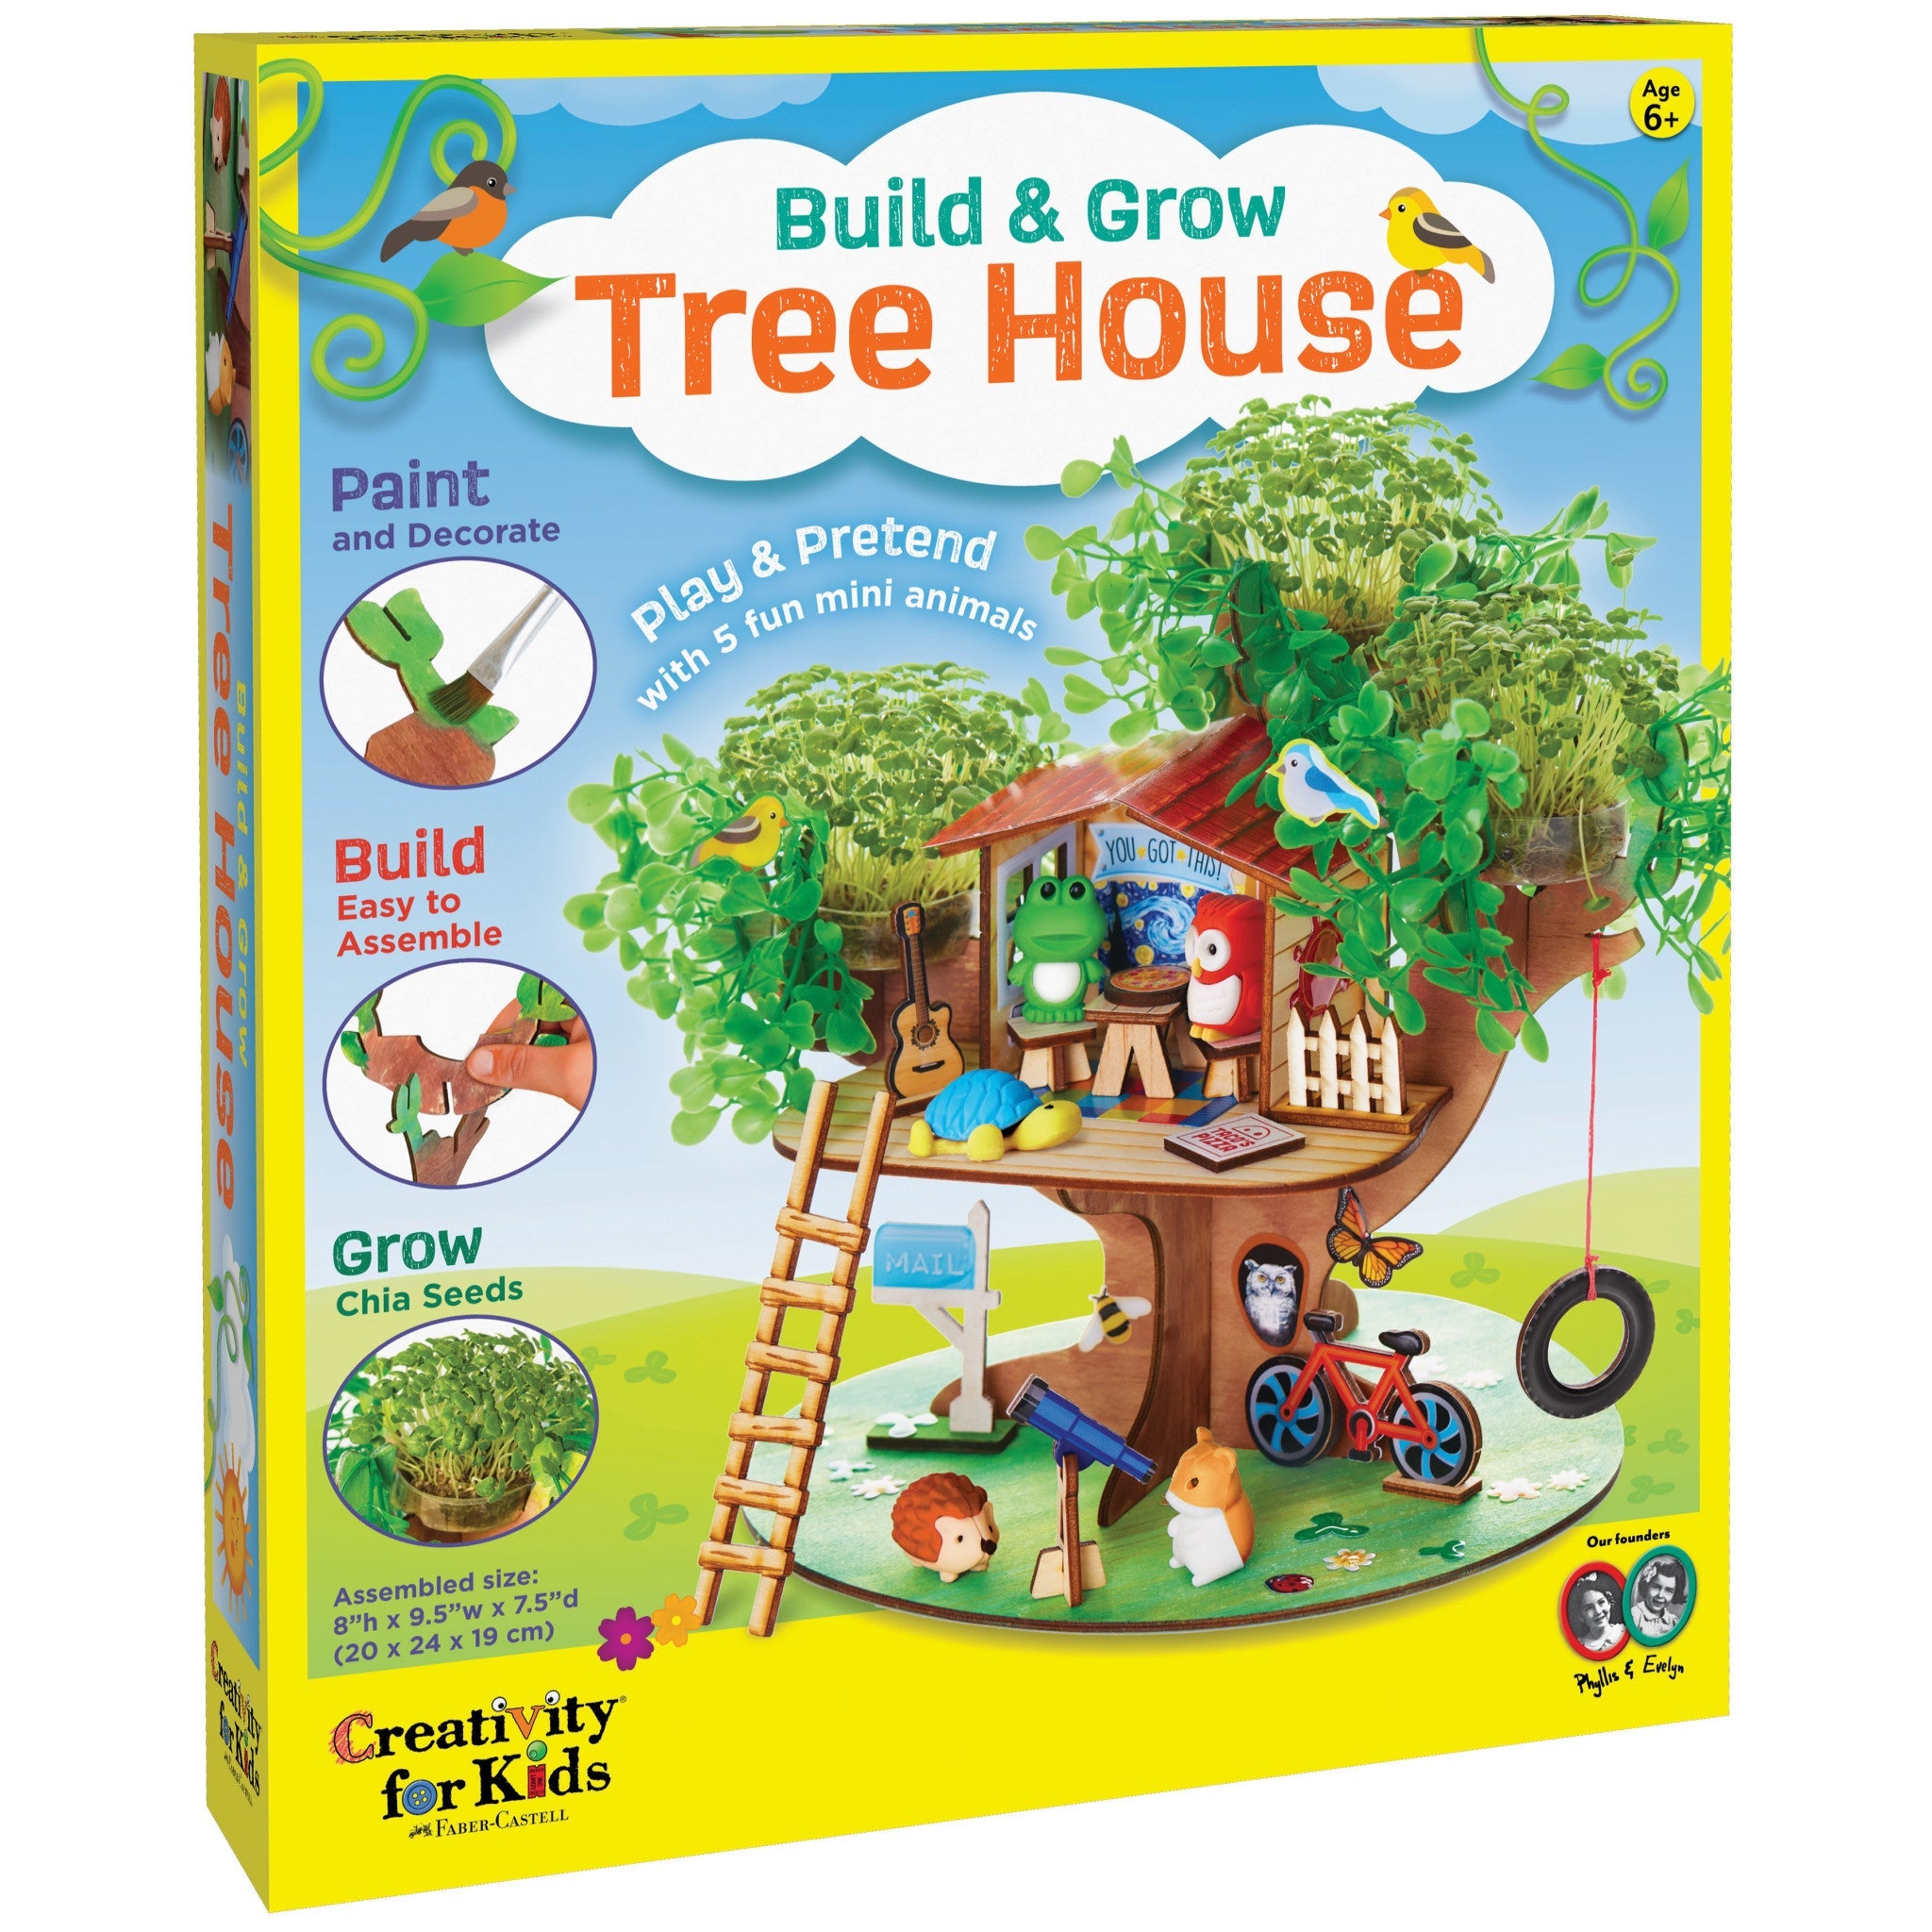 Mini Sketchbook  Grasshopper – Treehouse Toys